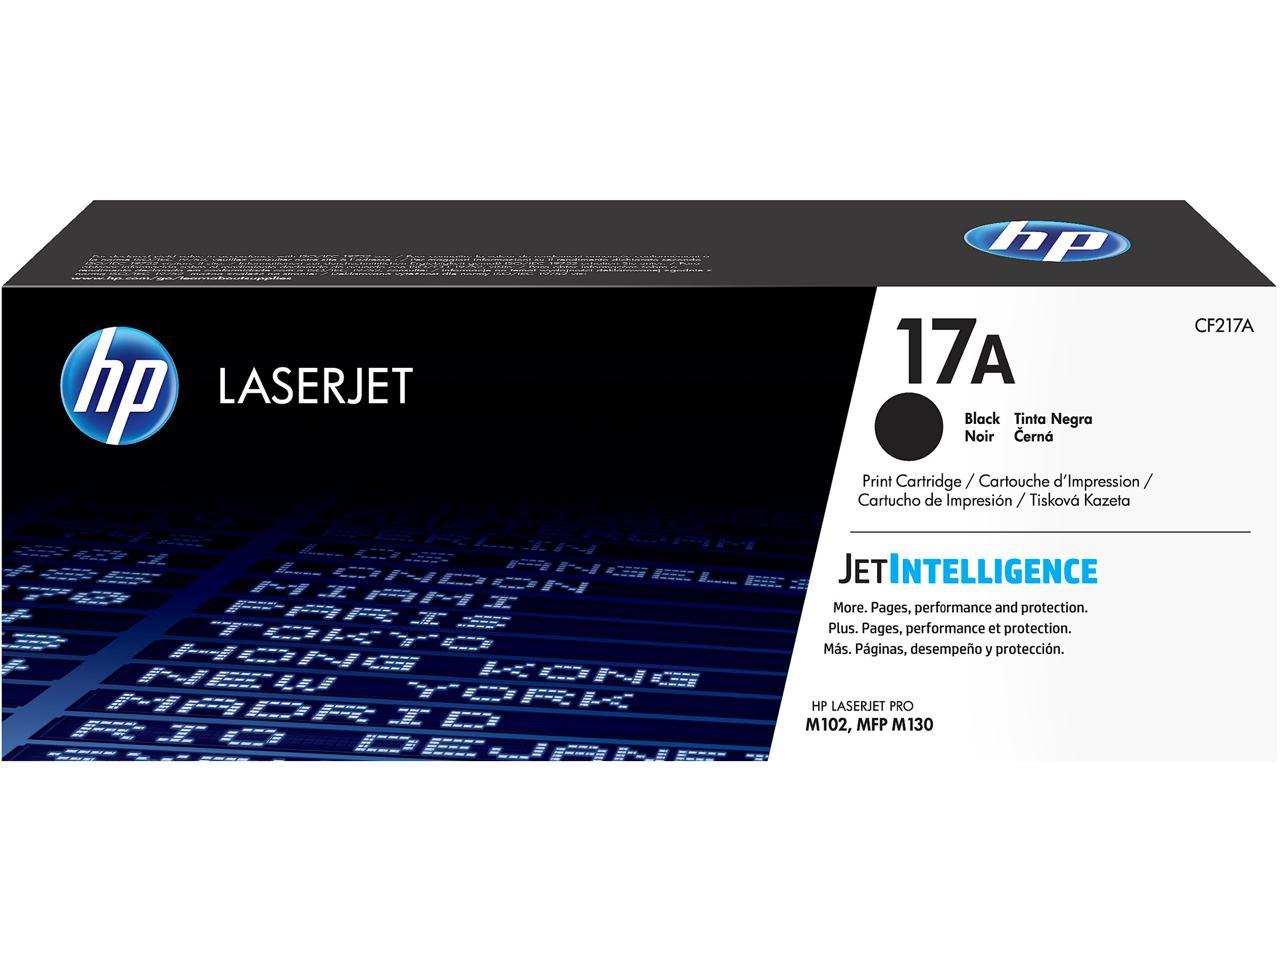 HP 17A LaserJet Toner Cartridge - Black